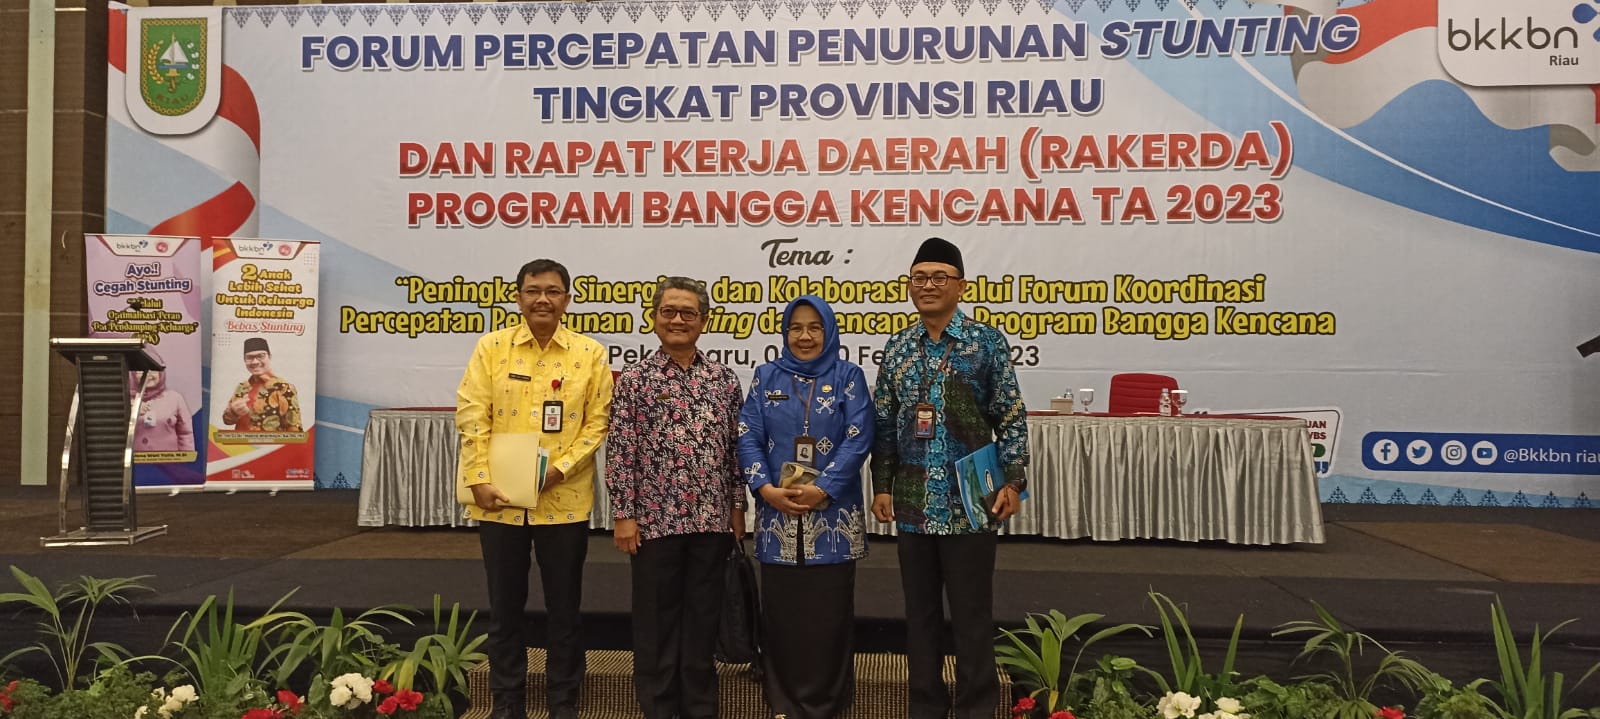 BKKBN Riau Laksanakan Forum Percepatan Penurunan Stunting Tingkat Provinsi Riau